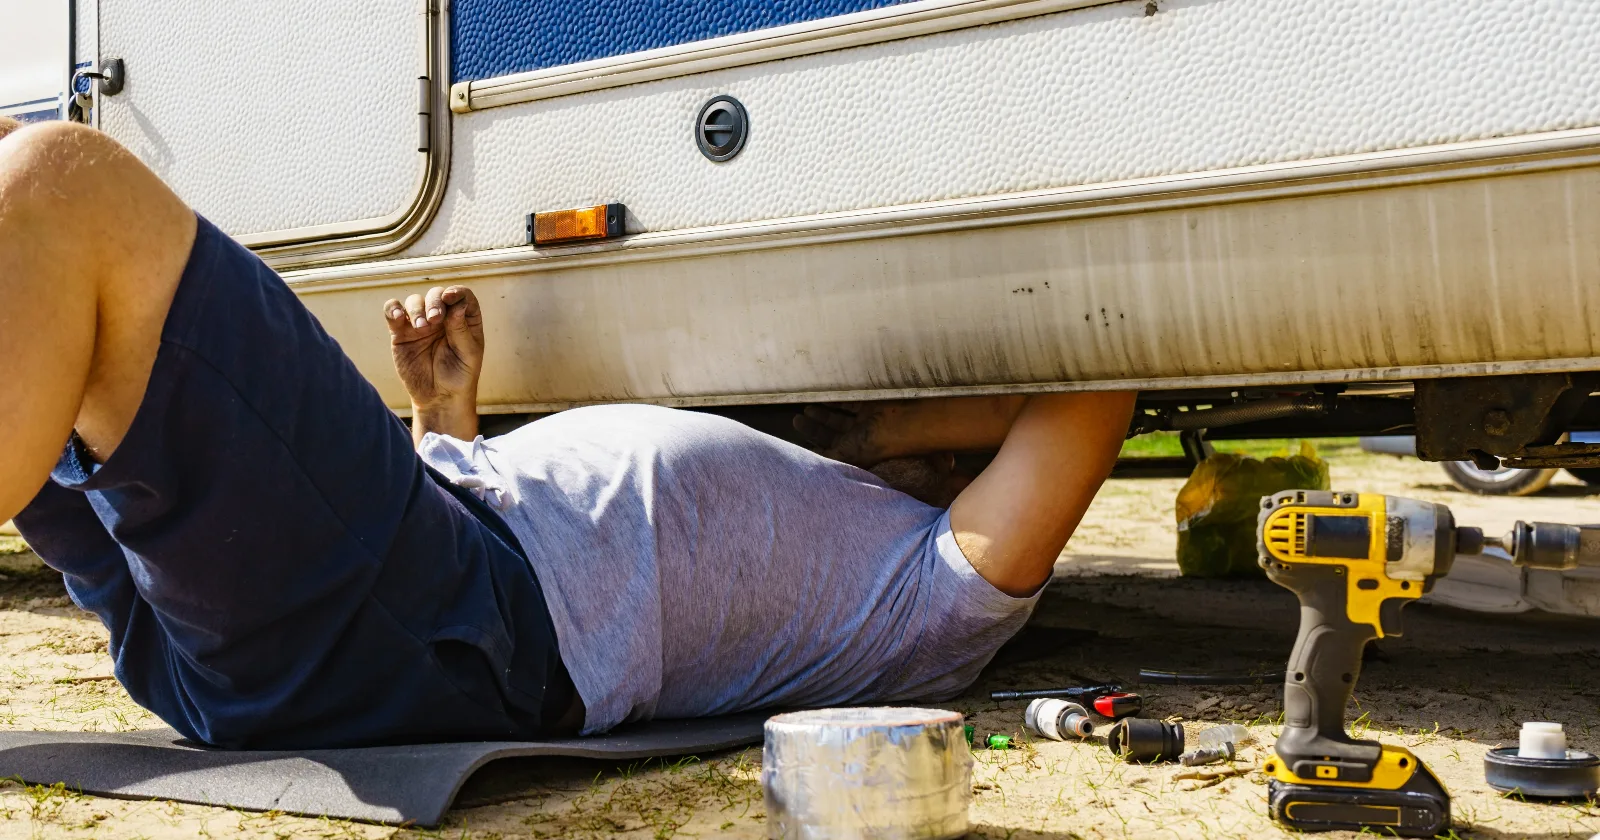 Man lying on ground, repairing bottom of the caravan vehicle with tools lying around